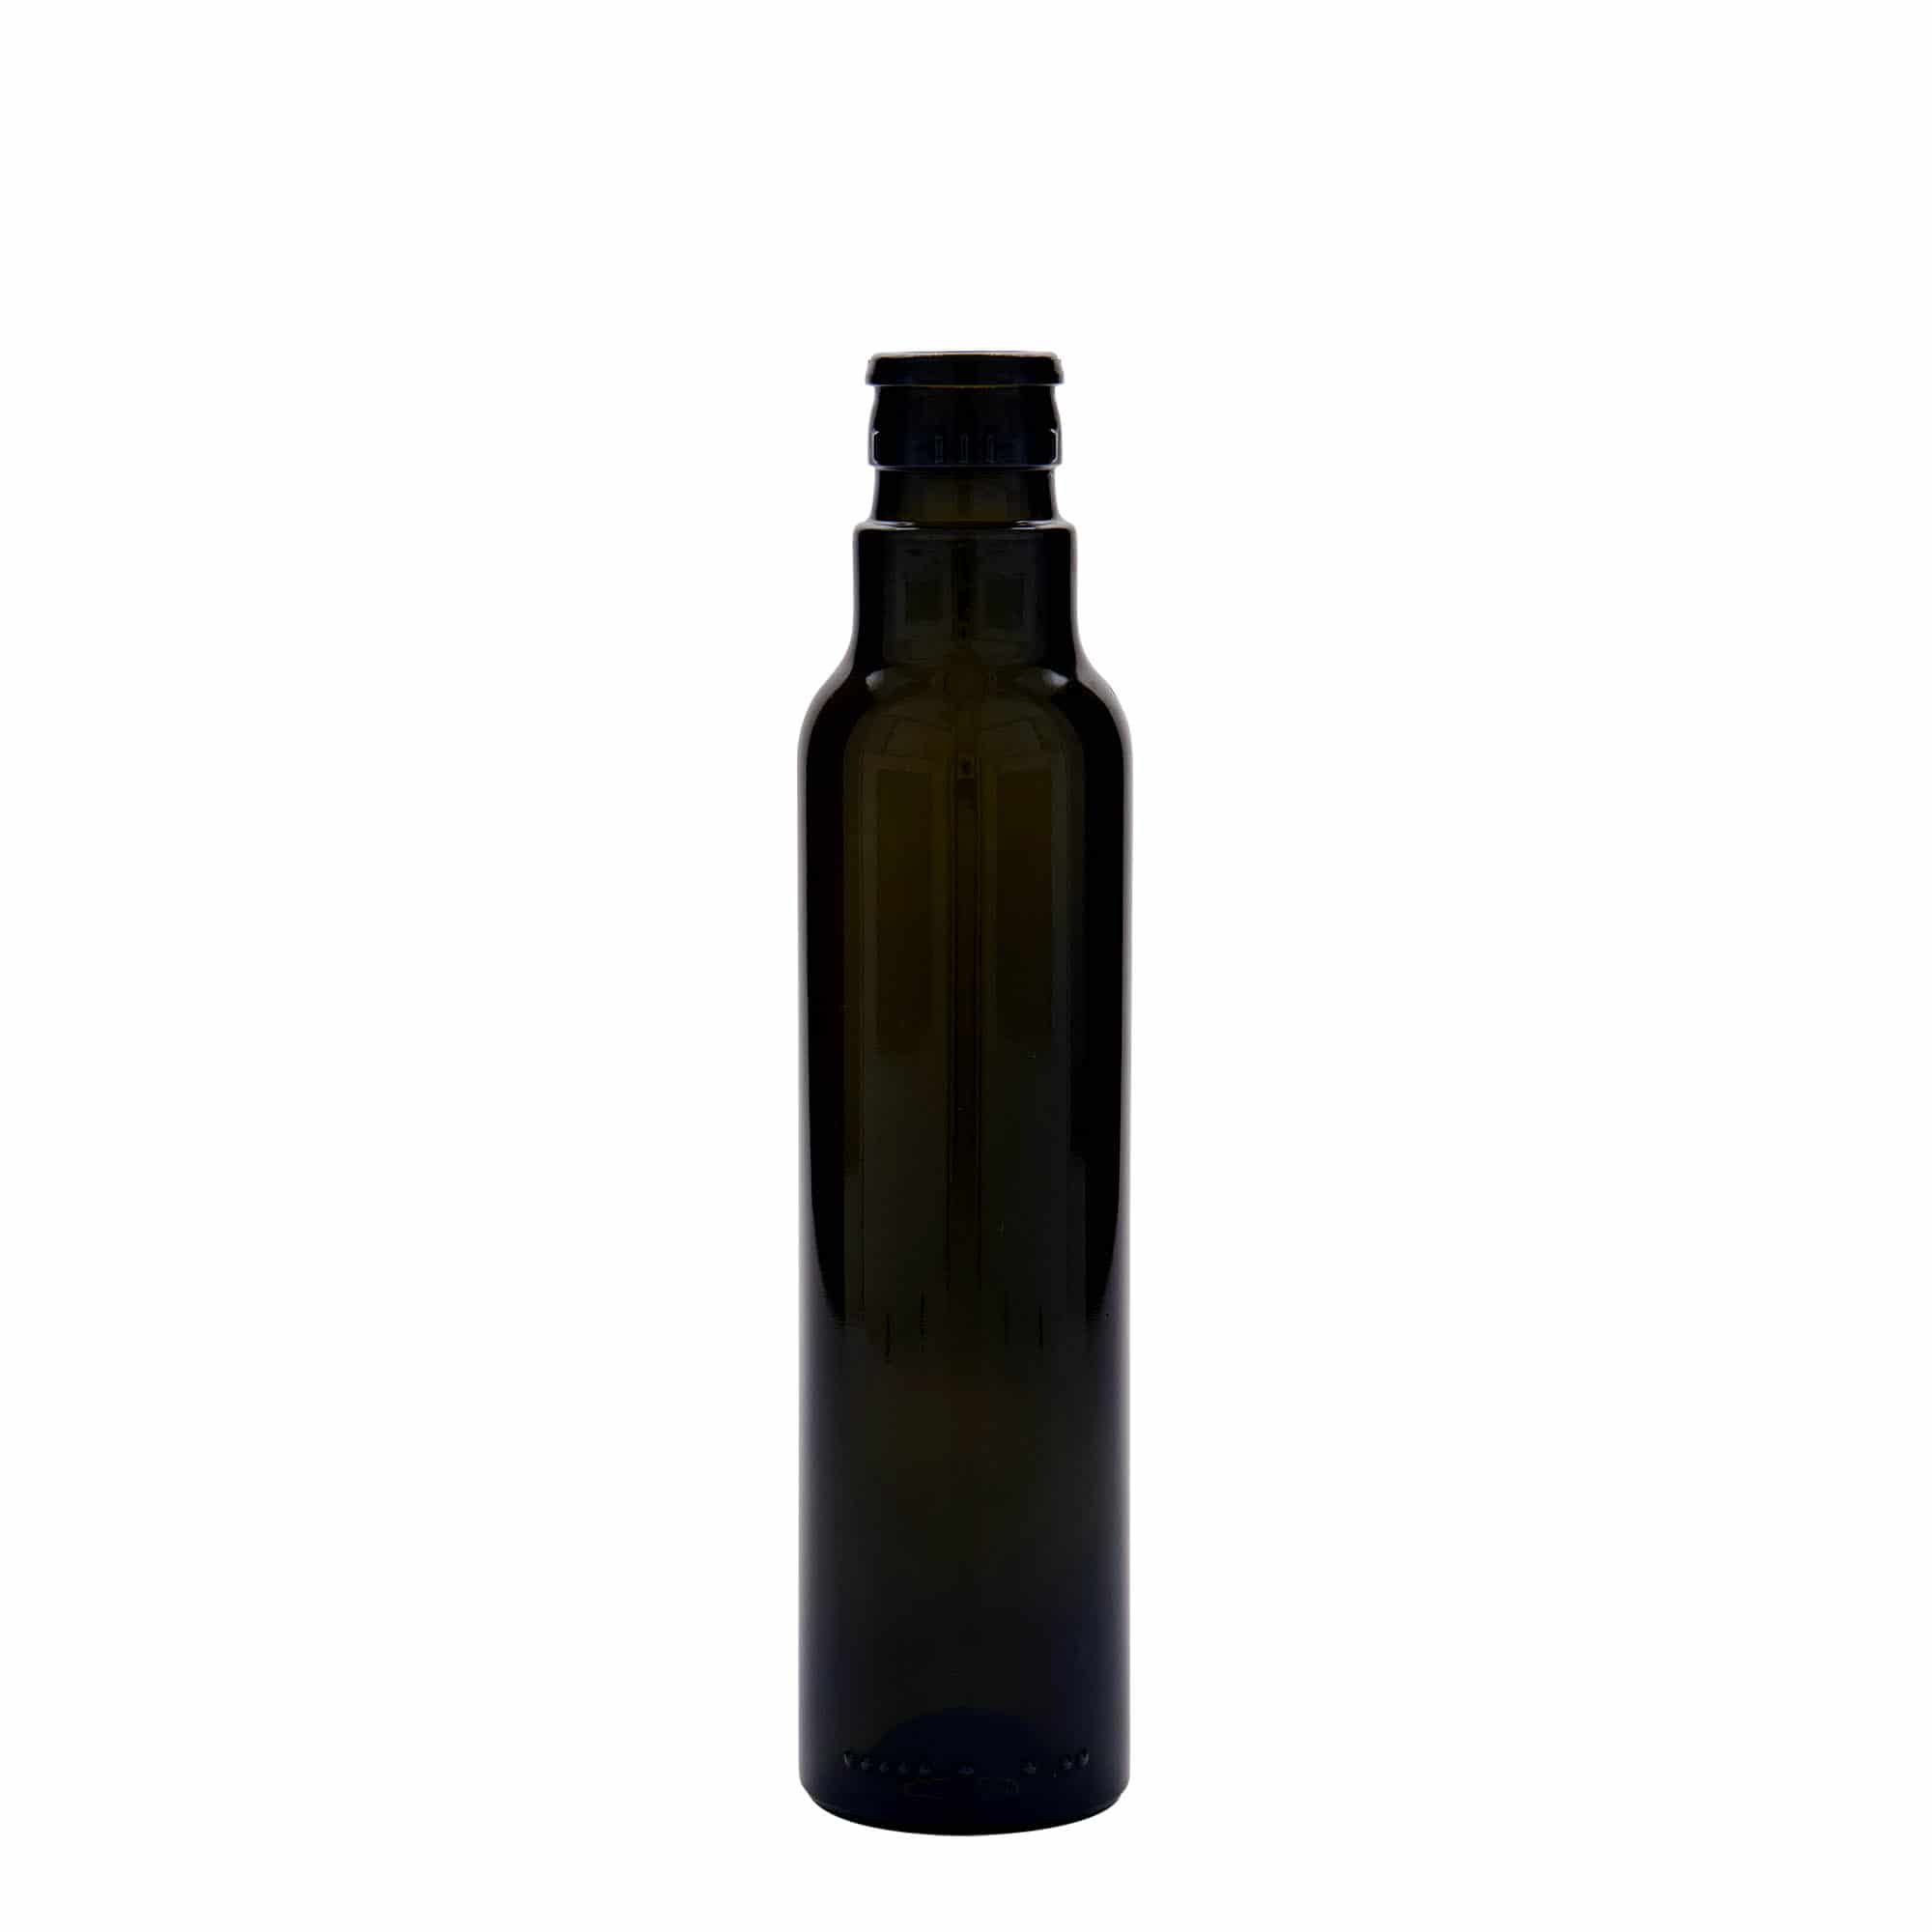 Bouteille de vinaigre / d’huile 250 ml 'Willy New', verre, vert antique, bouchage: DOP